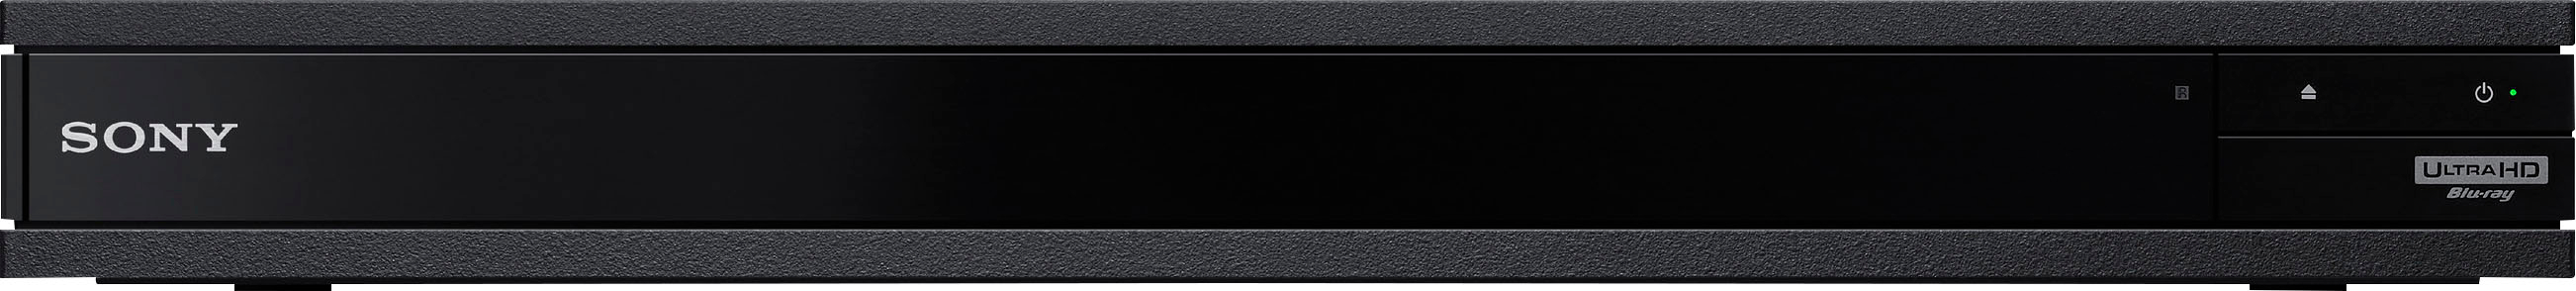 Wi-Fi Built-In Hi-Res Best UBPX800M2 Streaming HD - Ultra 4K UBP-X800M2 Buy Black Audio Sony Blu-Ray Player